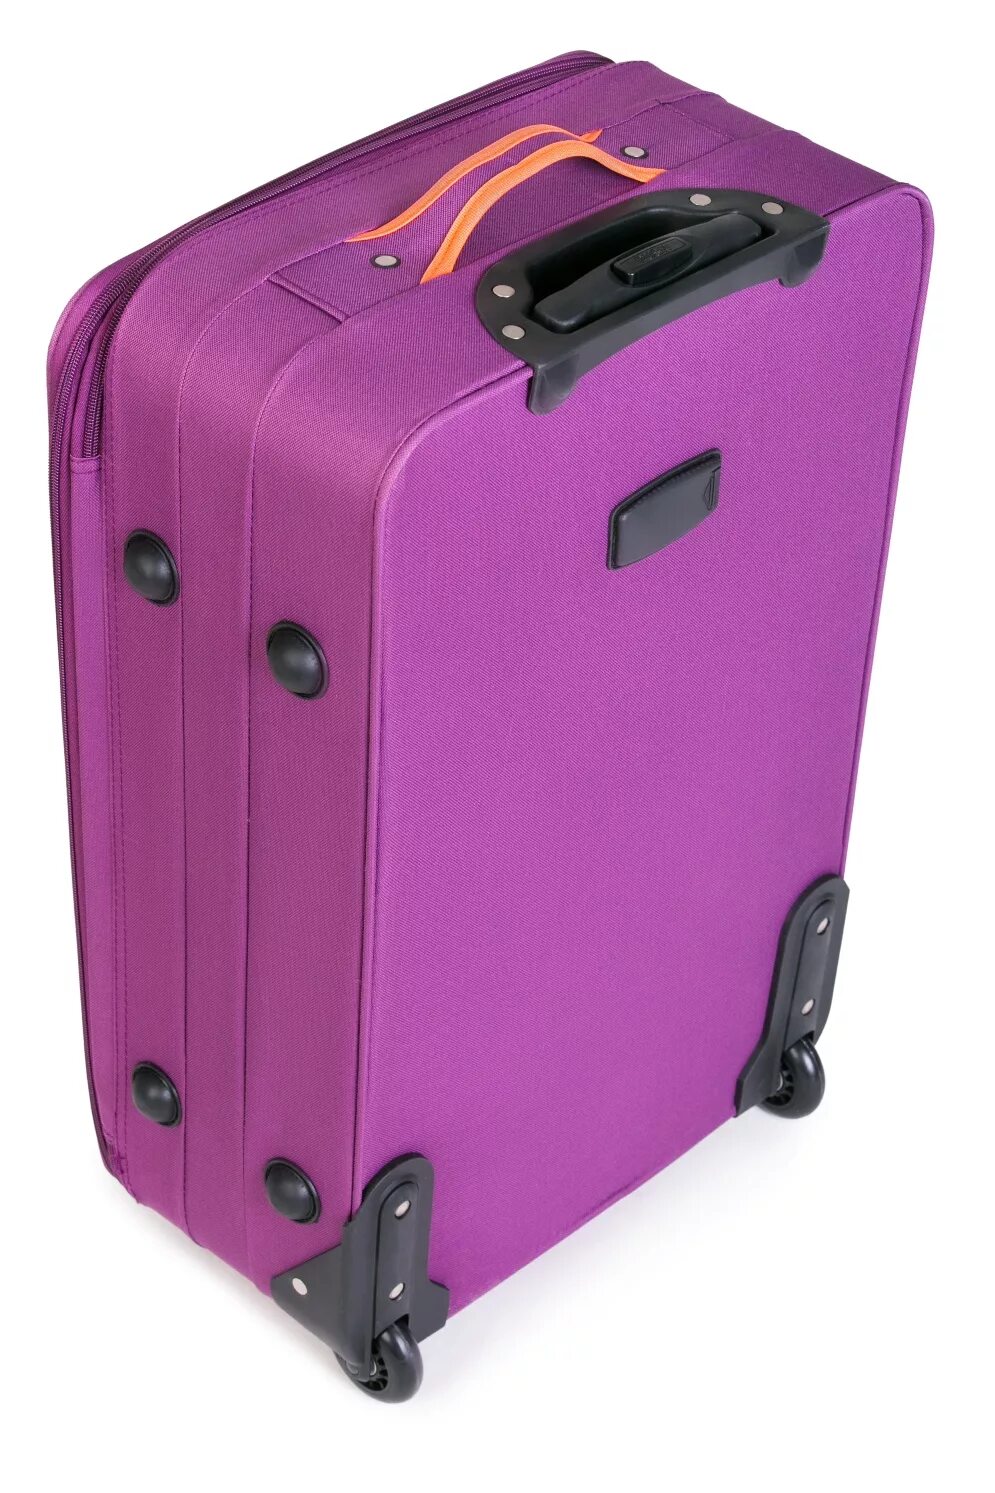 Купить чемодан цены. Чемодан "Baudet", цвет: фиолетовый. Чемодан Baudet фиолетовый 70л. Чемодан 55х40х25 вайлдберриз. Чемодан dielleb210 s.